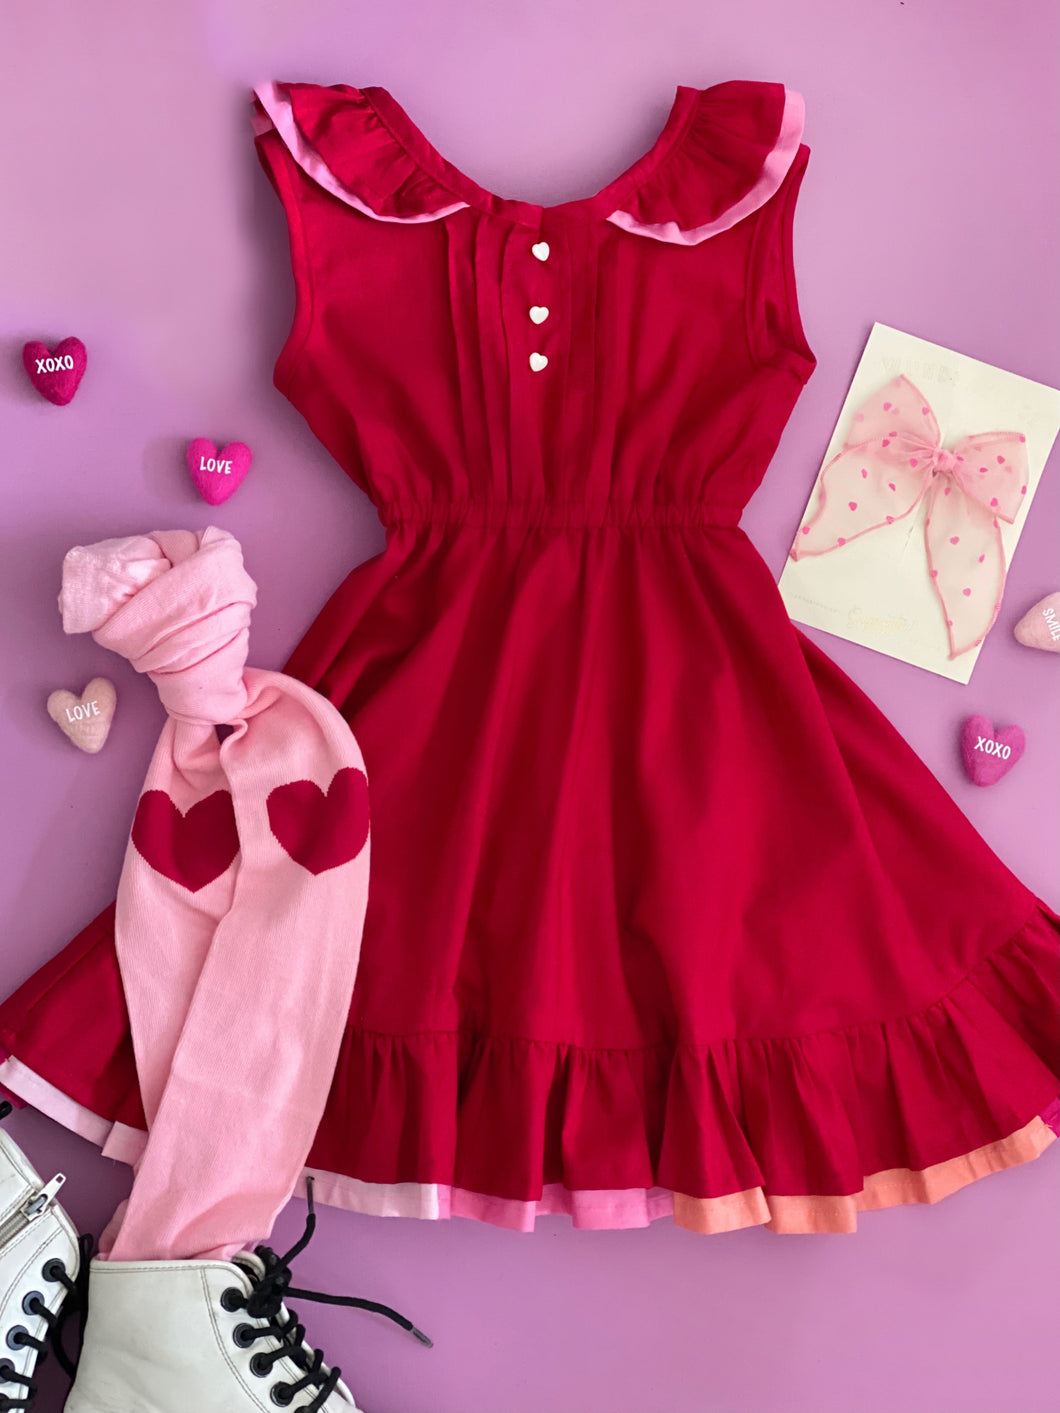 Red dress / shore colors Model 1962